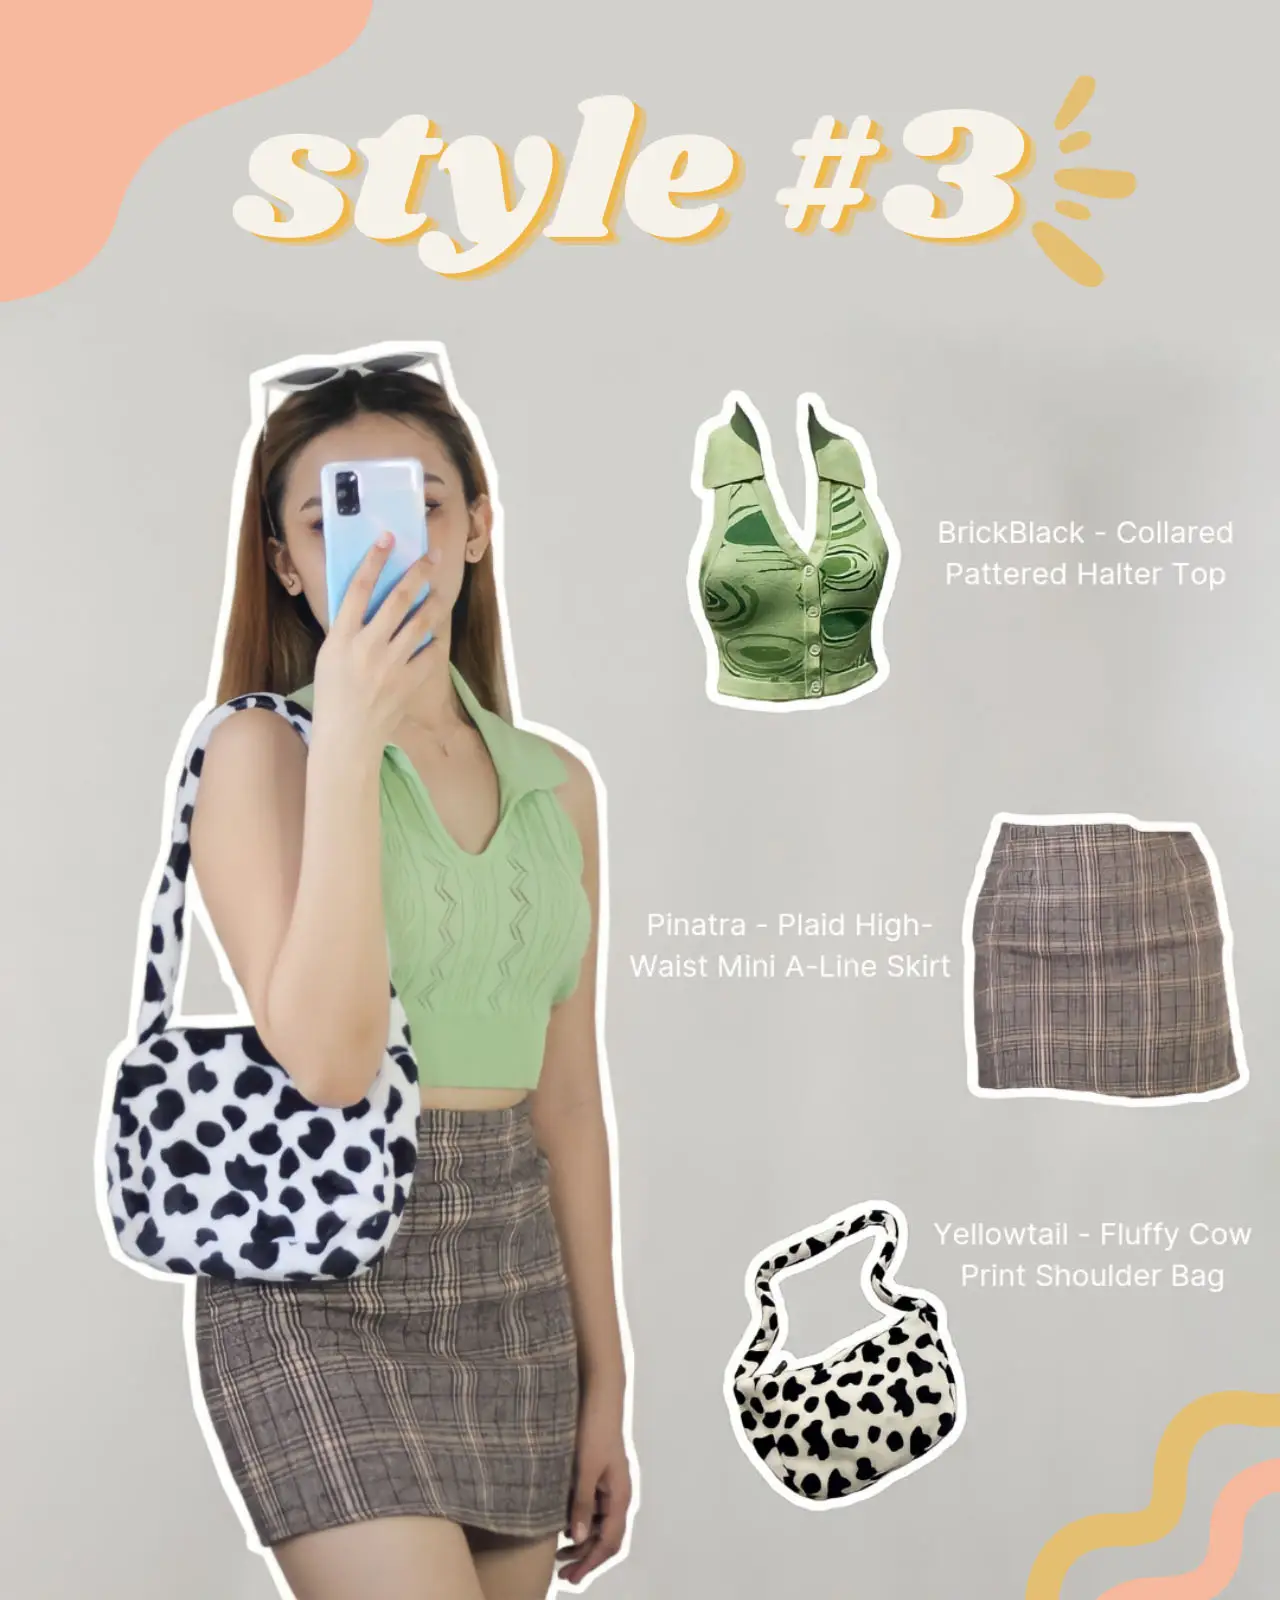 BrickBlack - High-Waist Mini A-Line Skirt